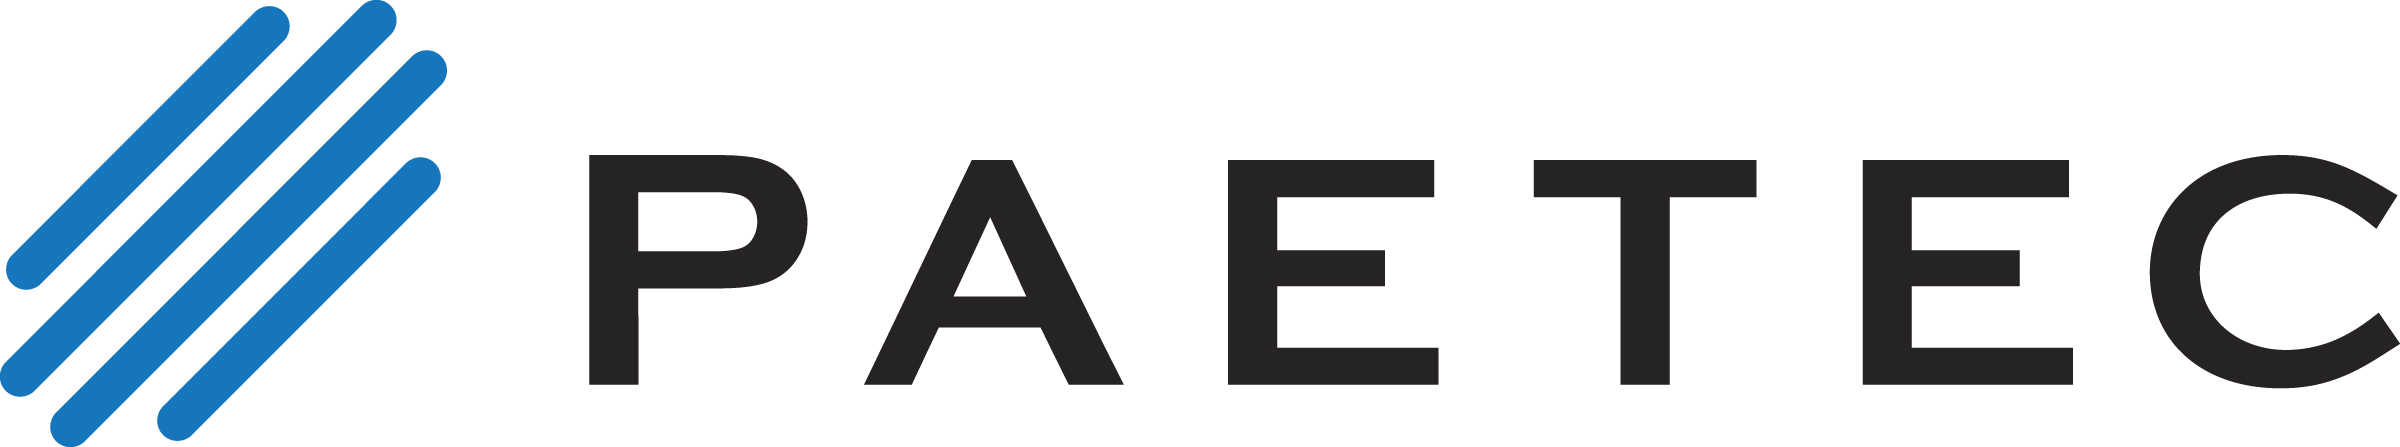 Paetec Holding Brand Logo